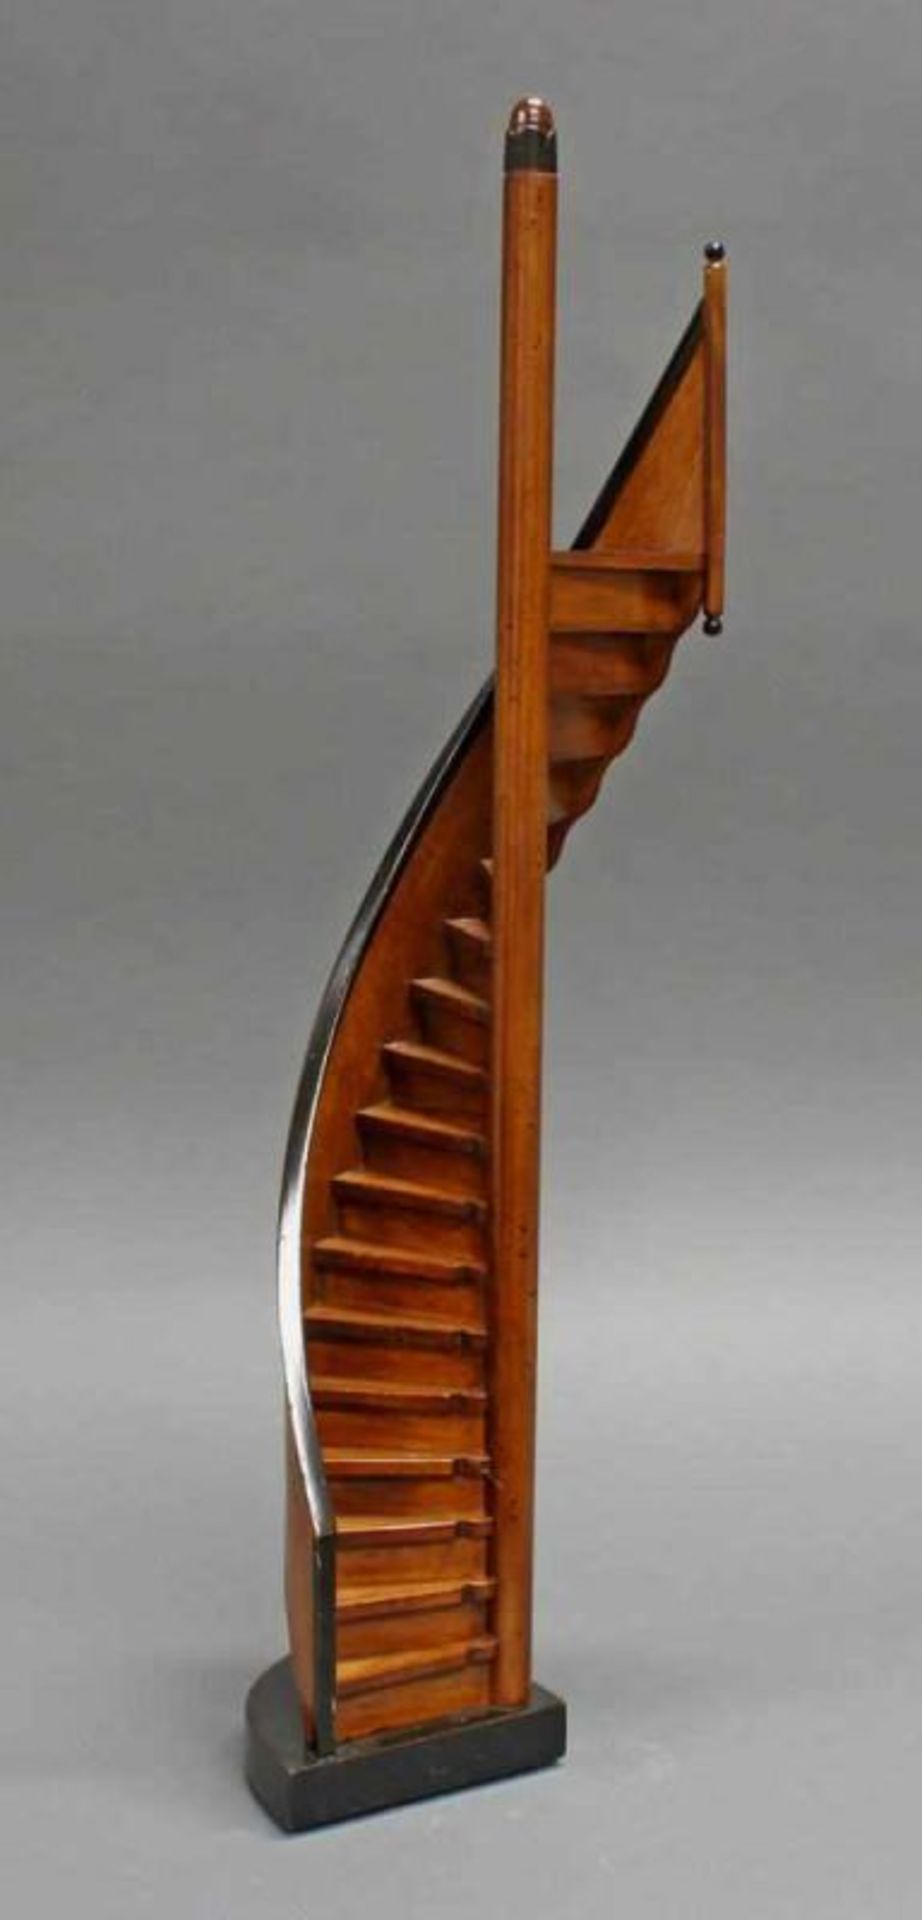 Architekturmodell, "Wendeltreppe", Holz, teils ebonisiert, 63 cm hoch 21.01 % buyer's premium on the